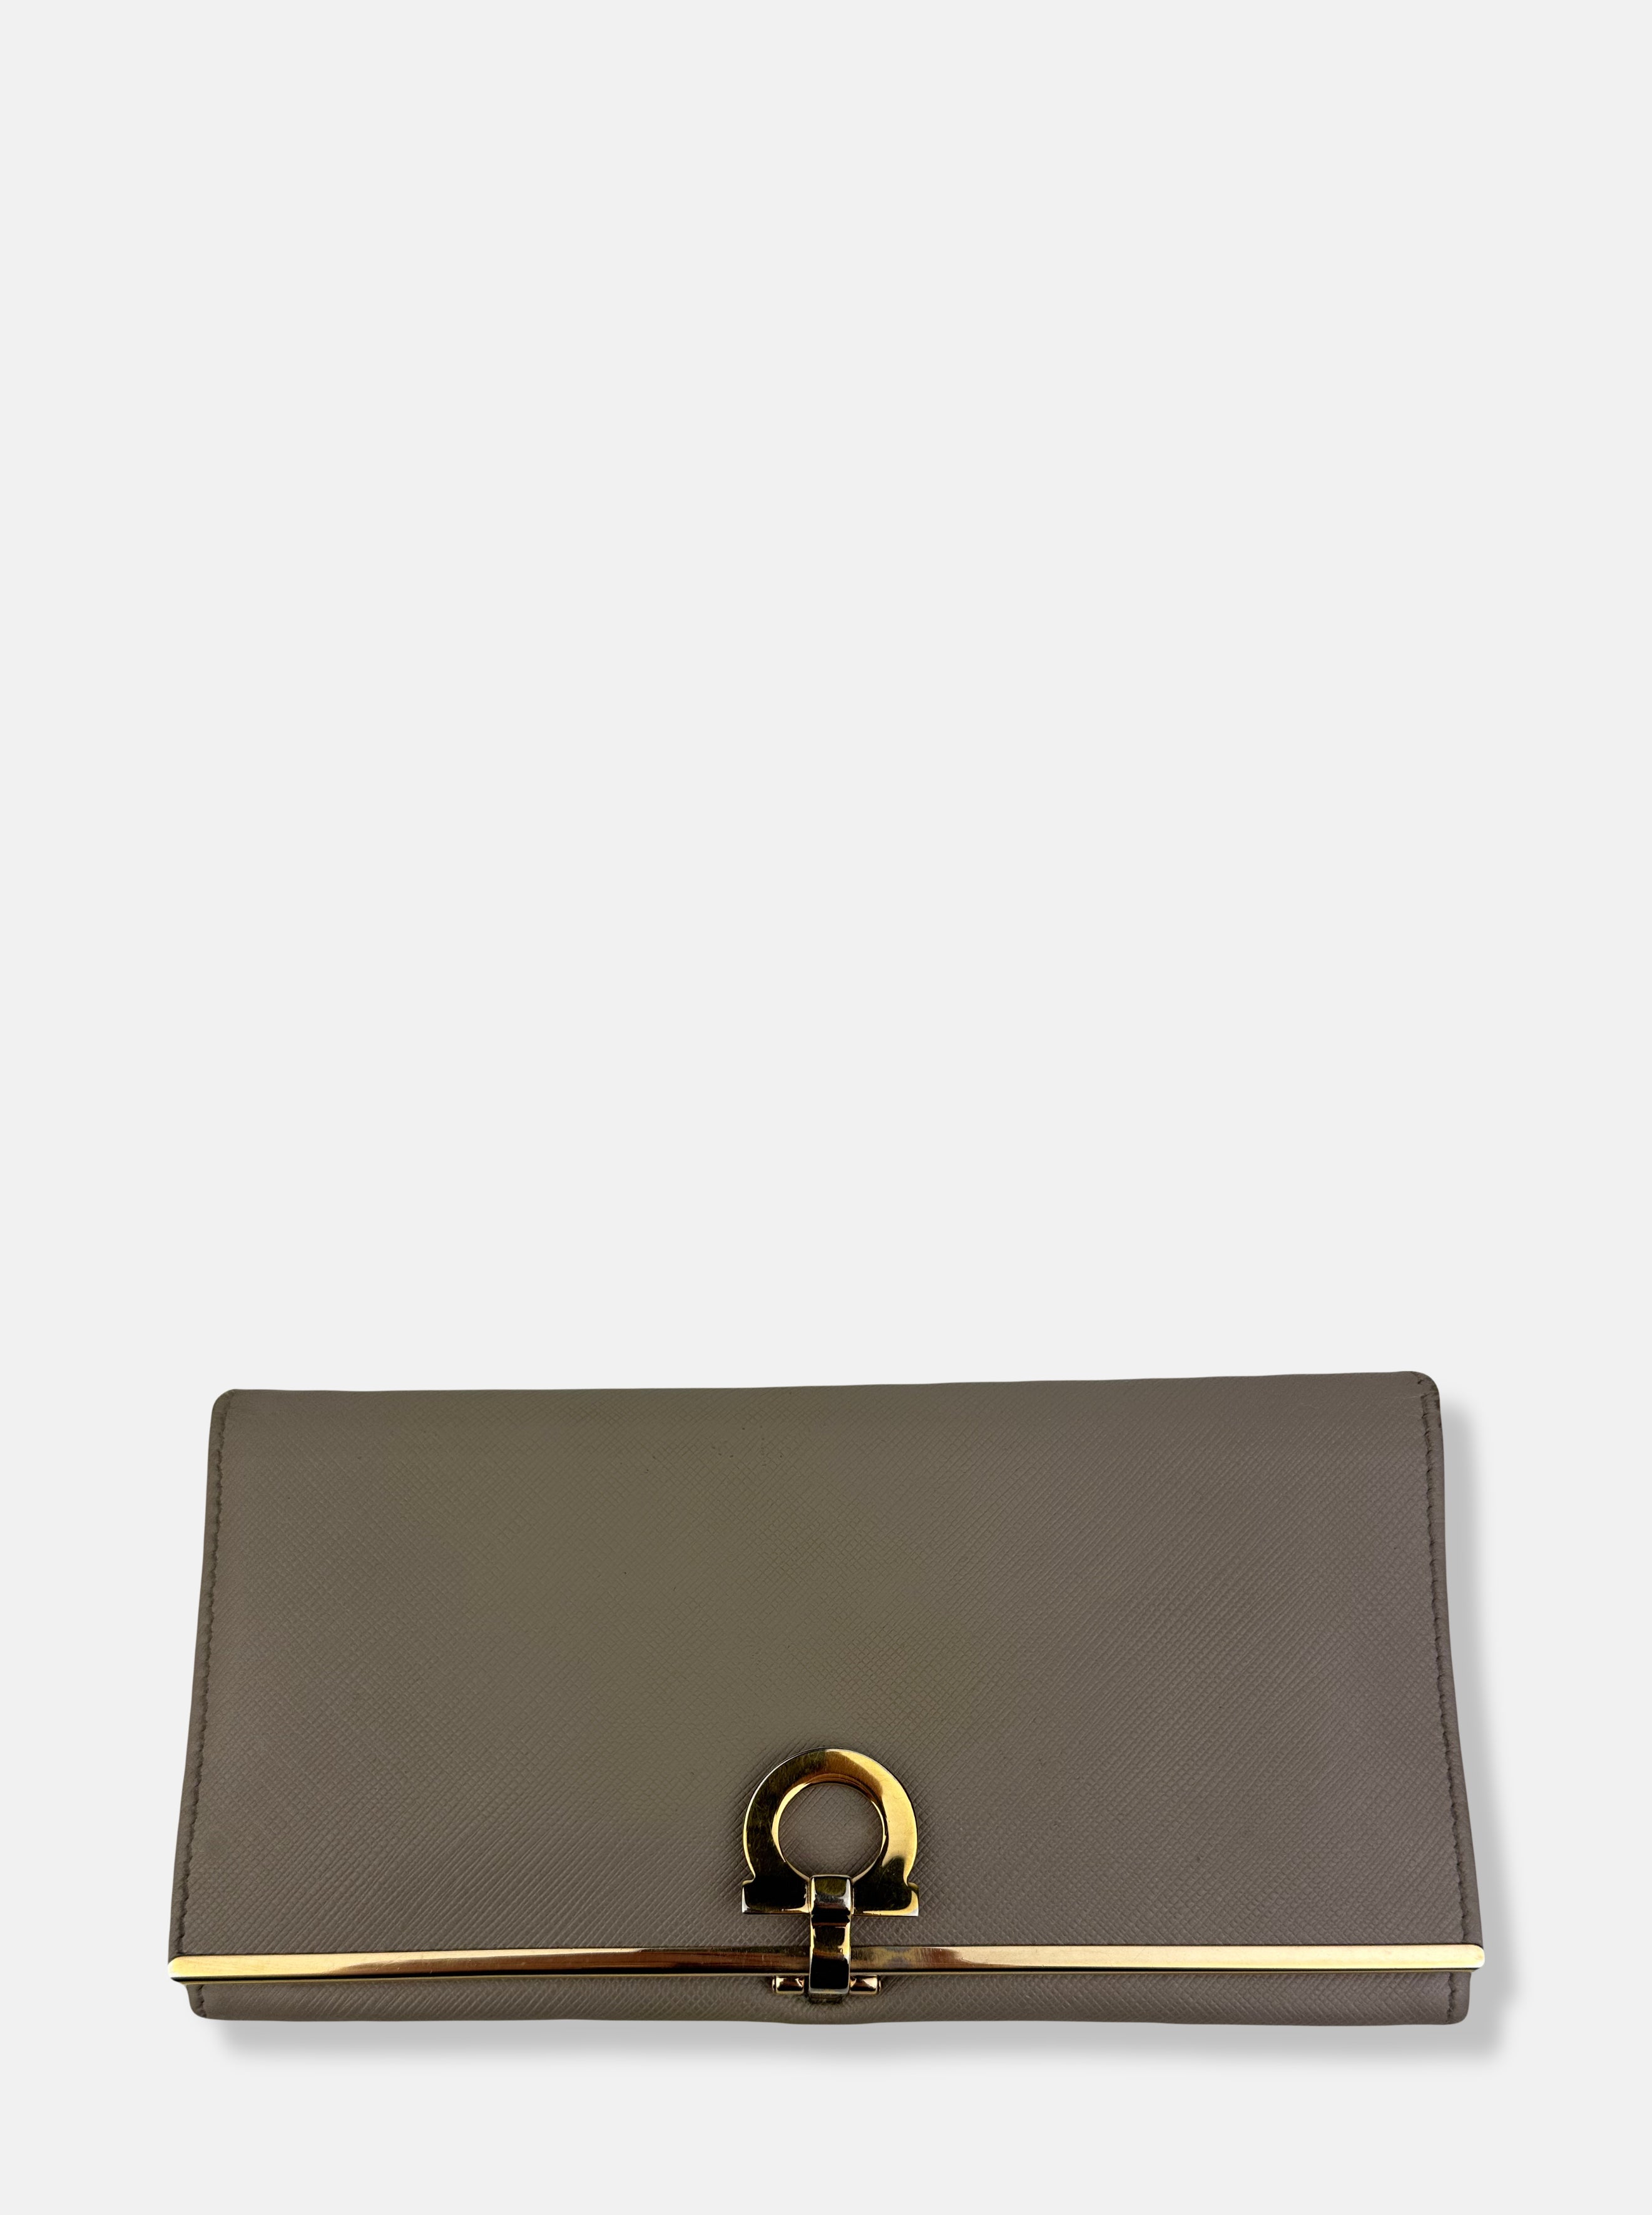 Salvatore Ferragamo Purse 218065 Black Patent Leather Handbag bow | eBay